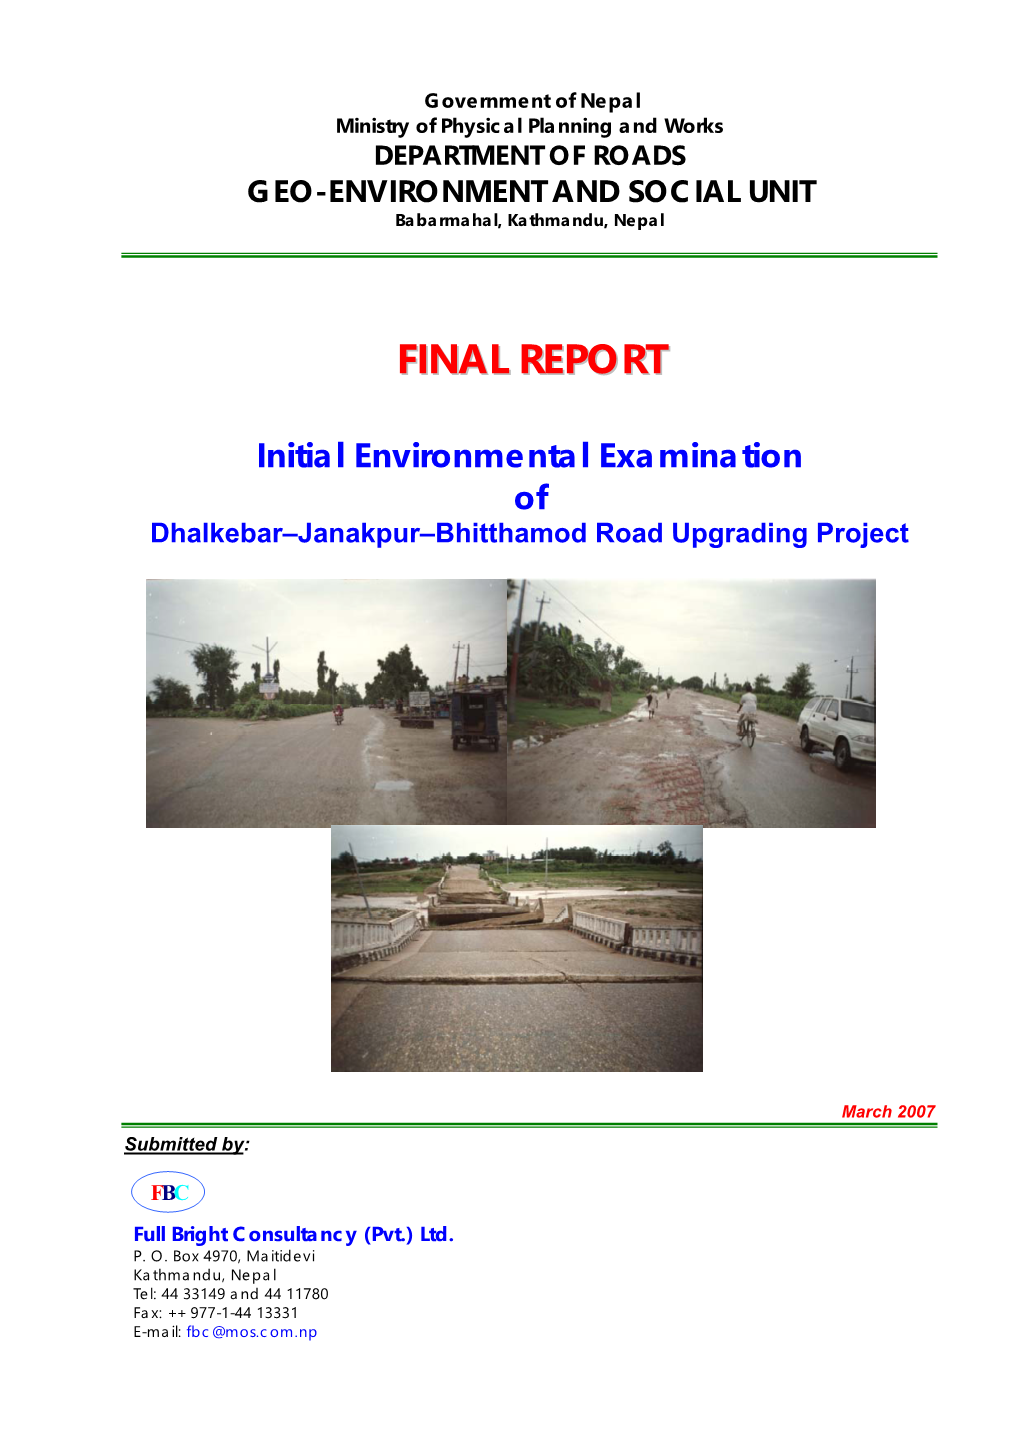 FINAL REPORT Initial Environmental Examination of Dhalkebar